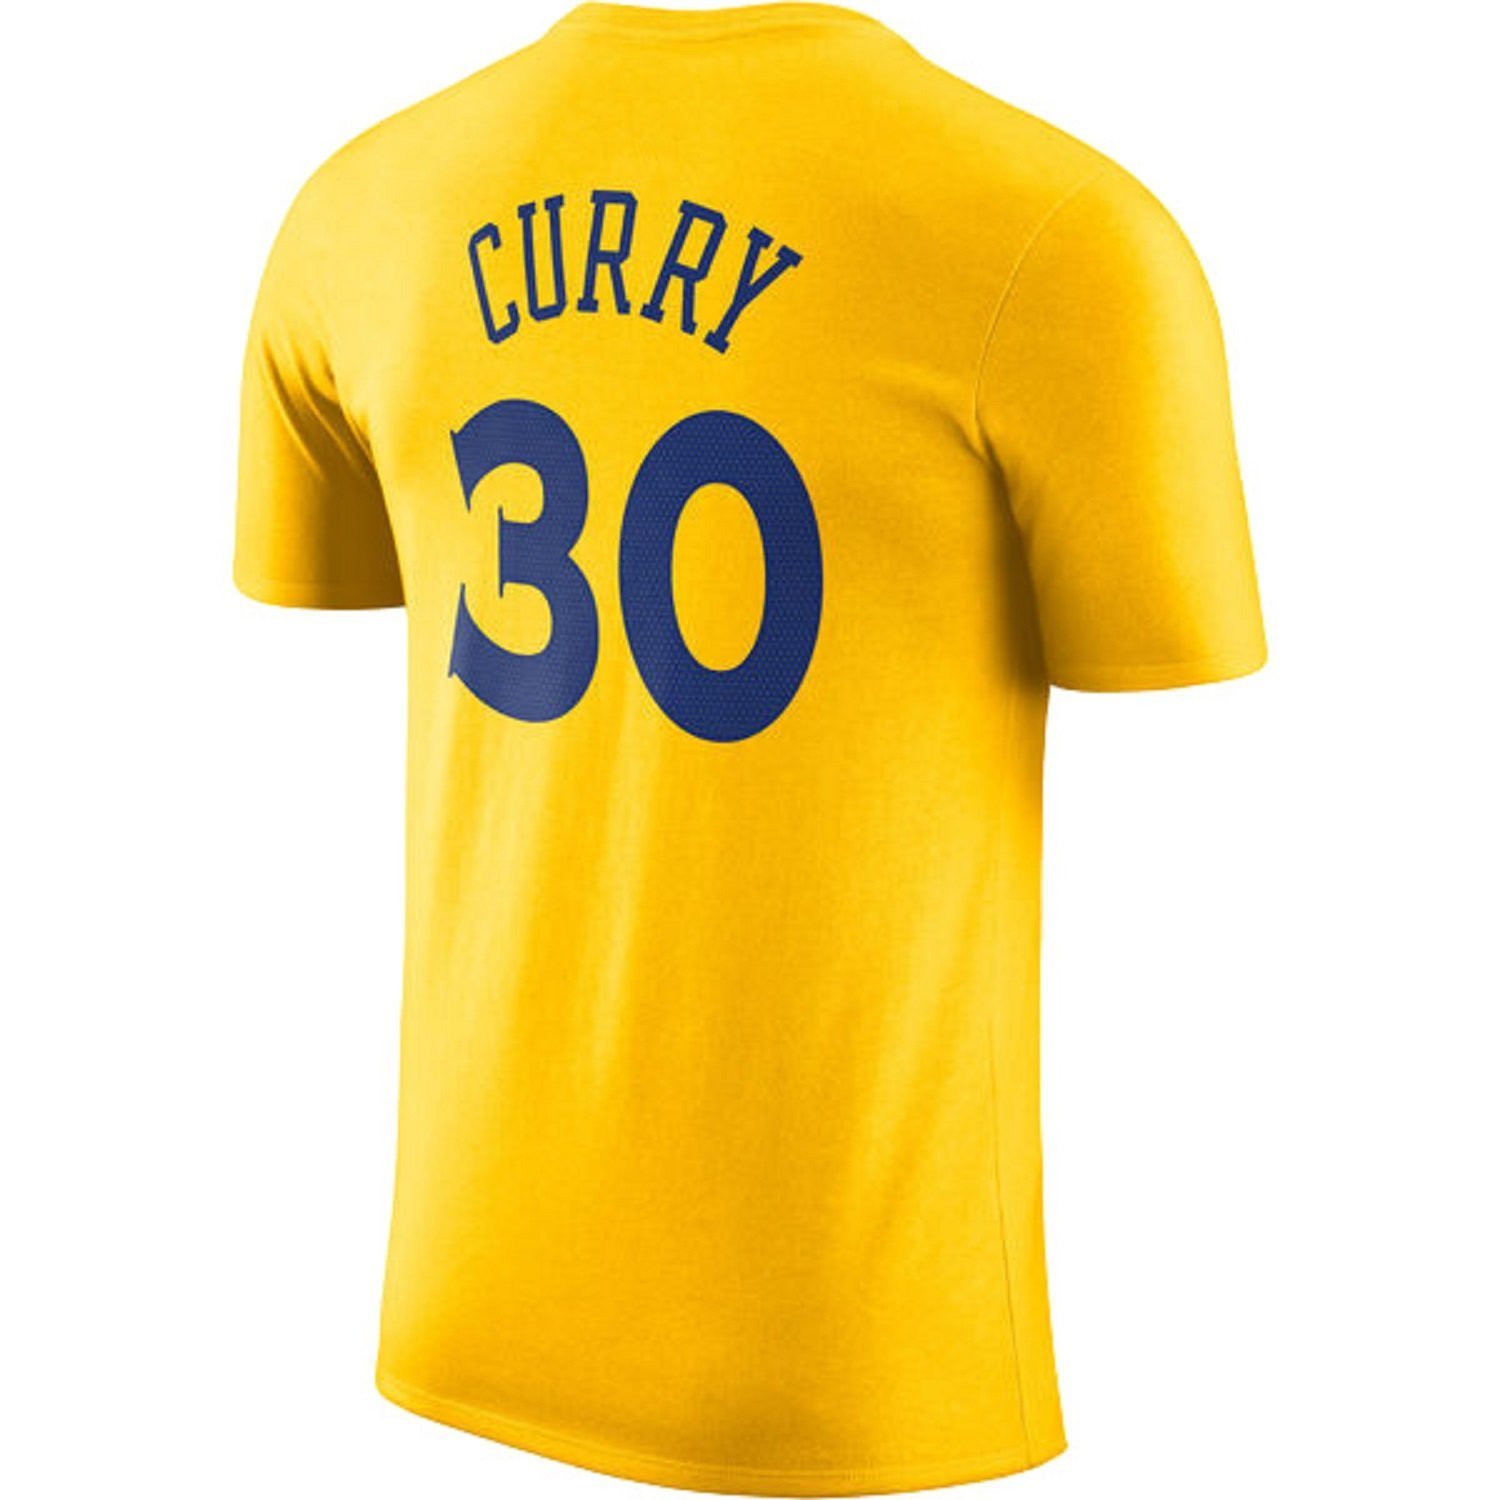 curry jersey t shirt